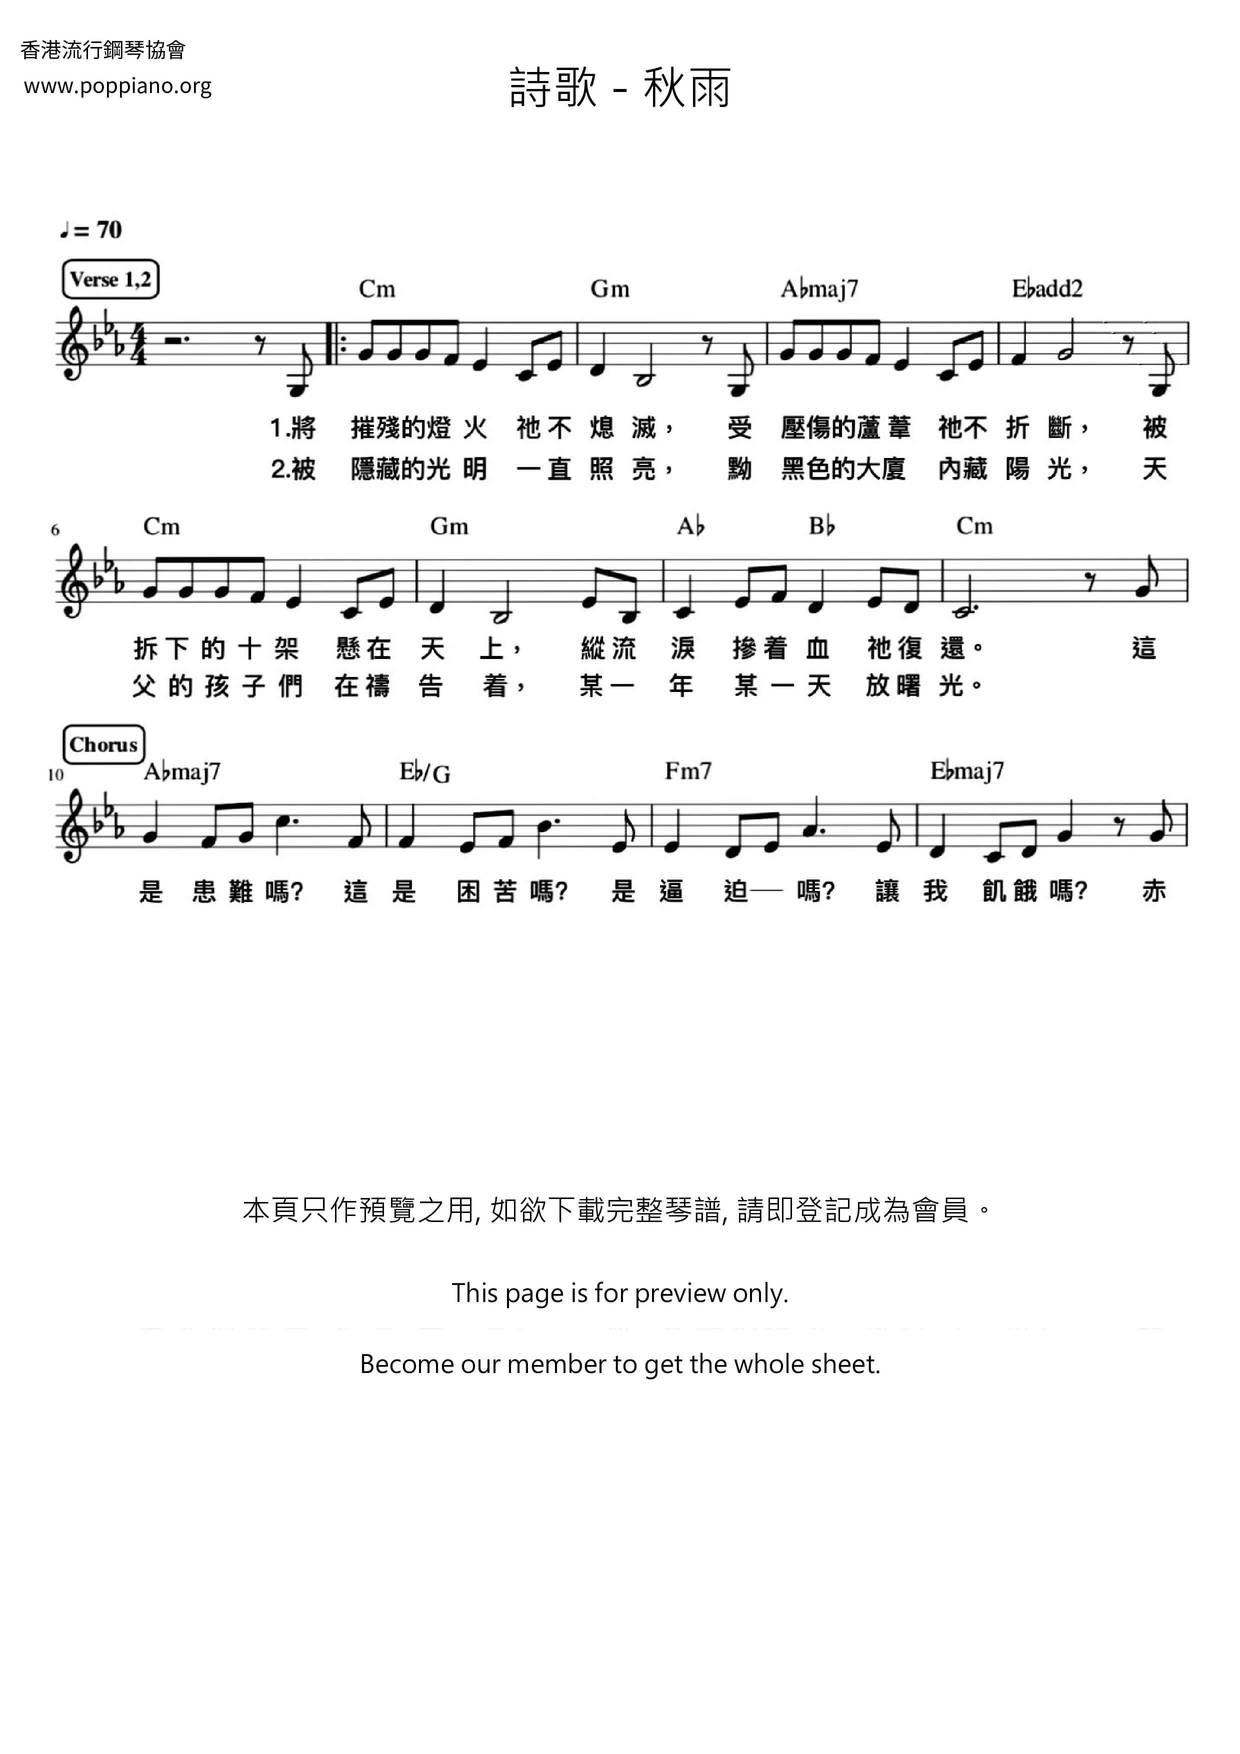 Qiuyu Score